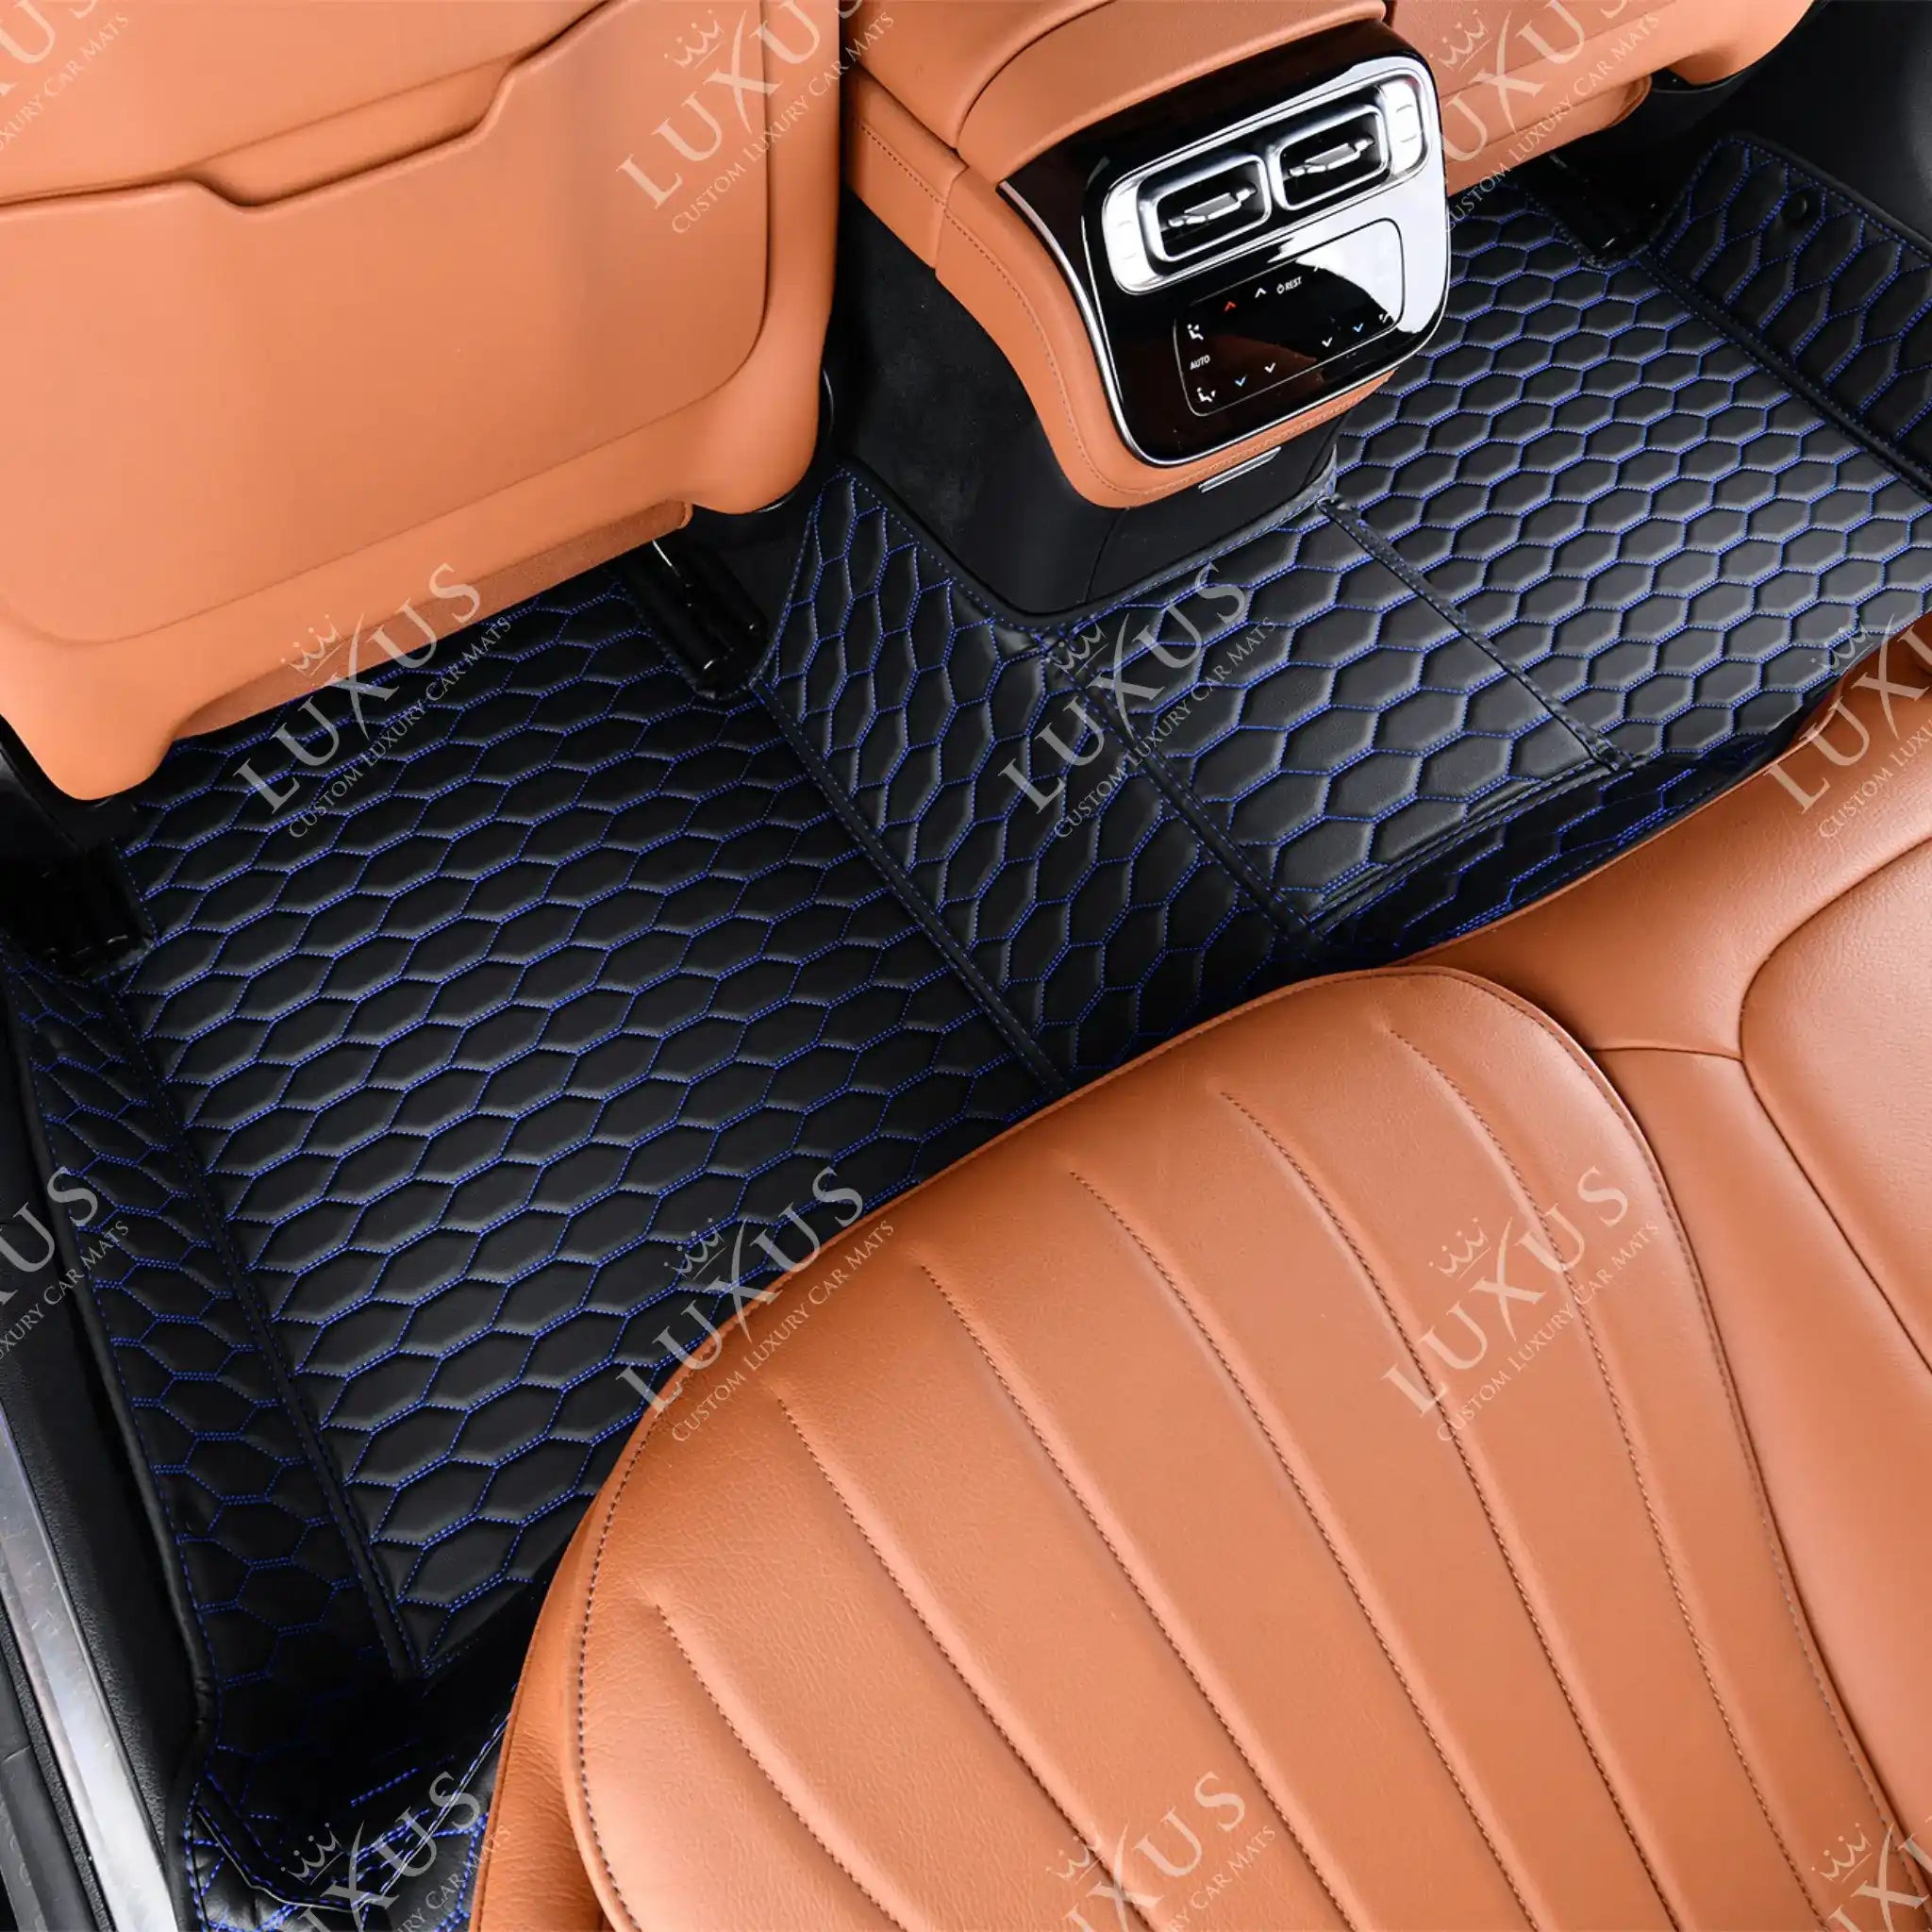 Custom-Car Tailors - Suzuki Celerio Leather Seat Covers.Get Your